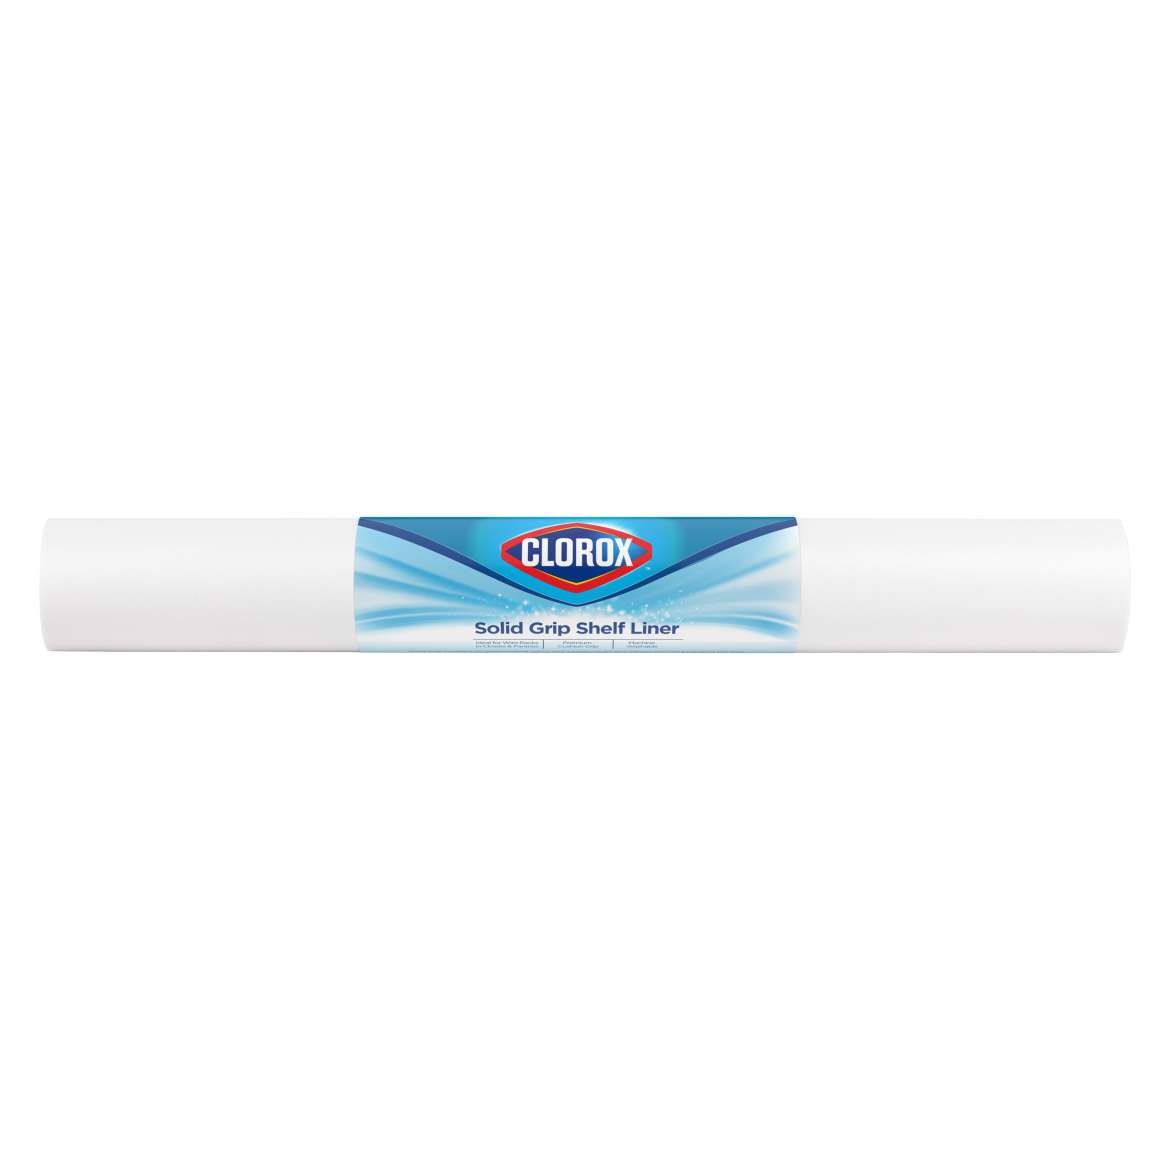 Clorox® Solid Grip Shelf Liner